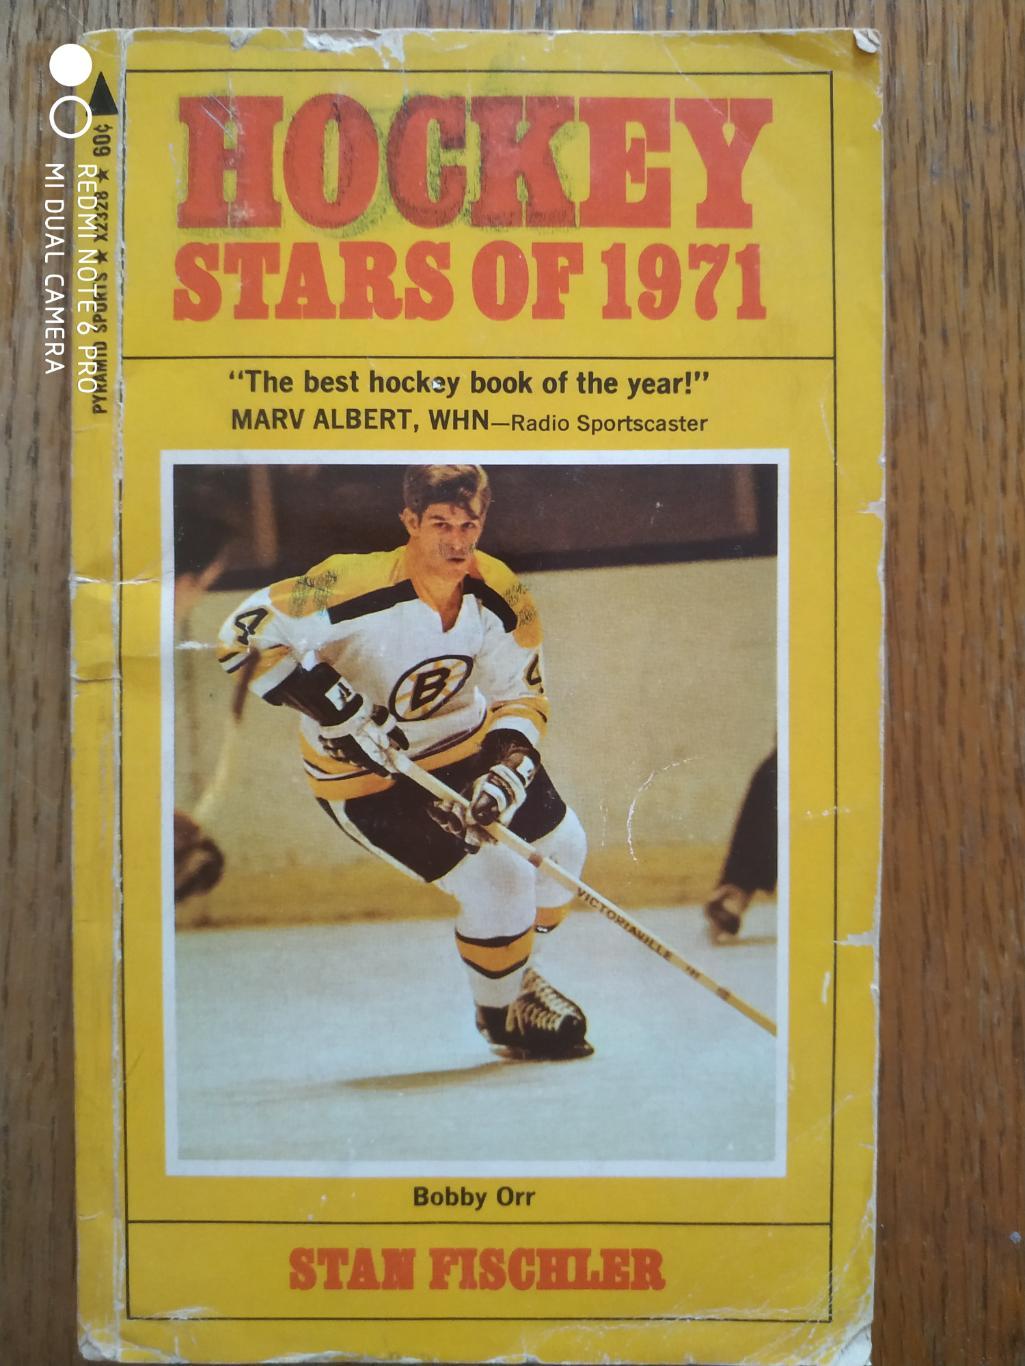 КНИГА НХЛ NHL POCKET BOOK 1971 HOCKEY STAR OF 1971 BORRY ORR by STAN FISCHLER